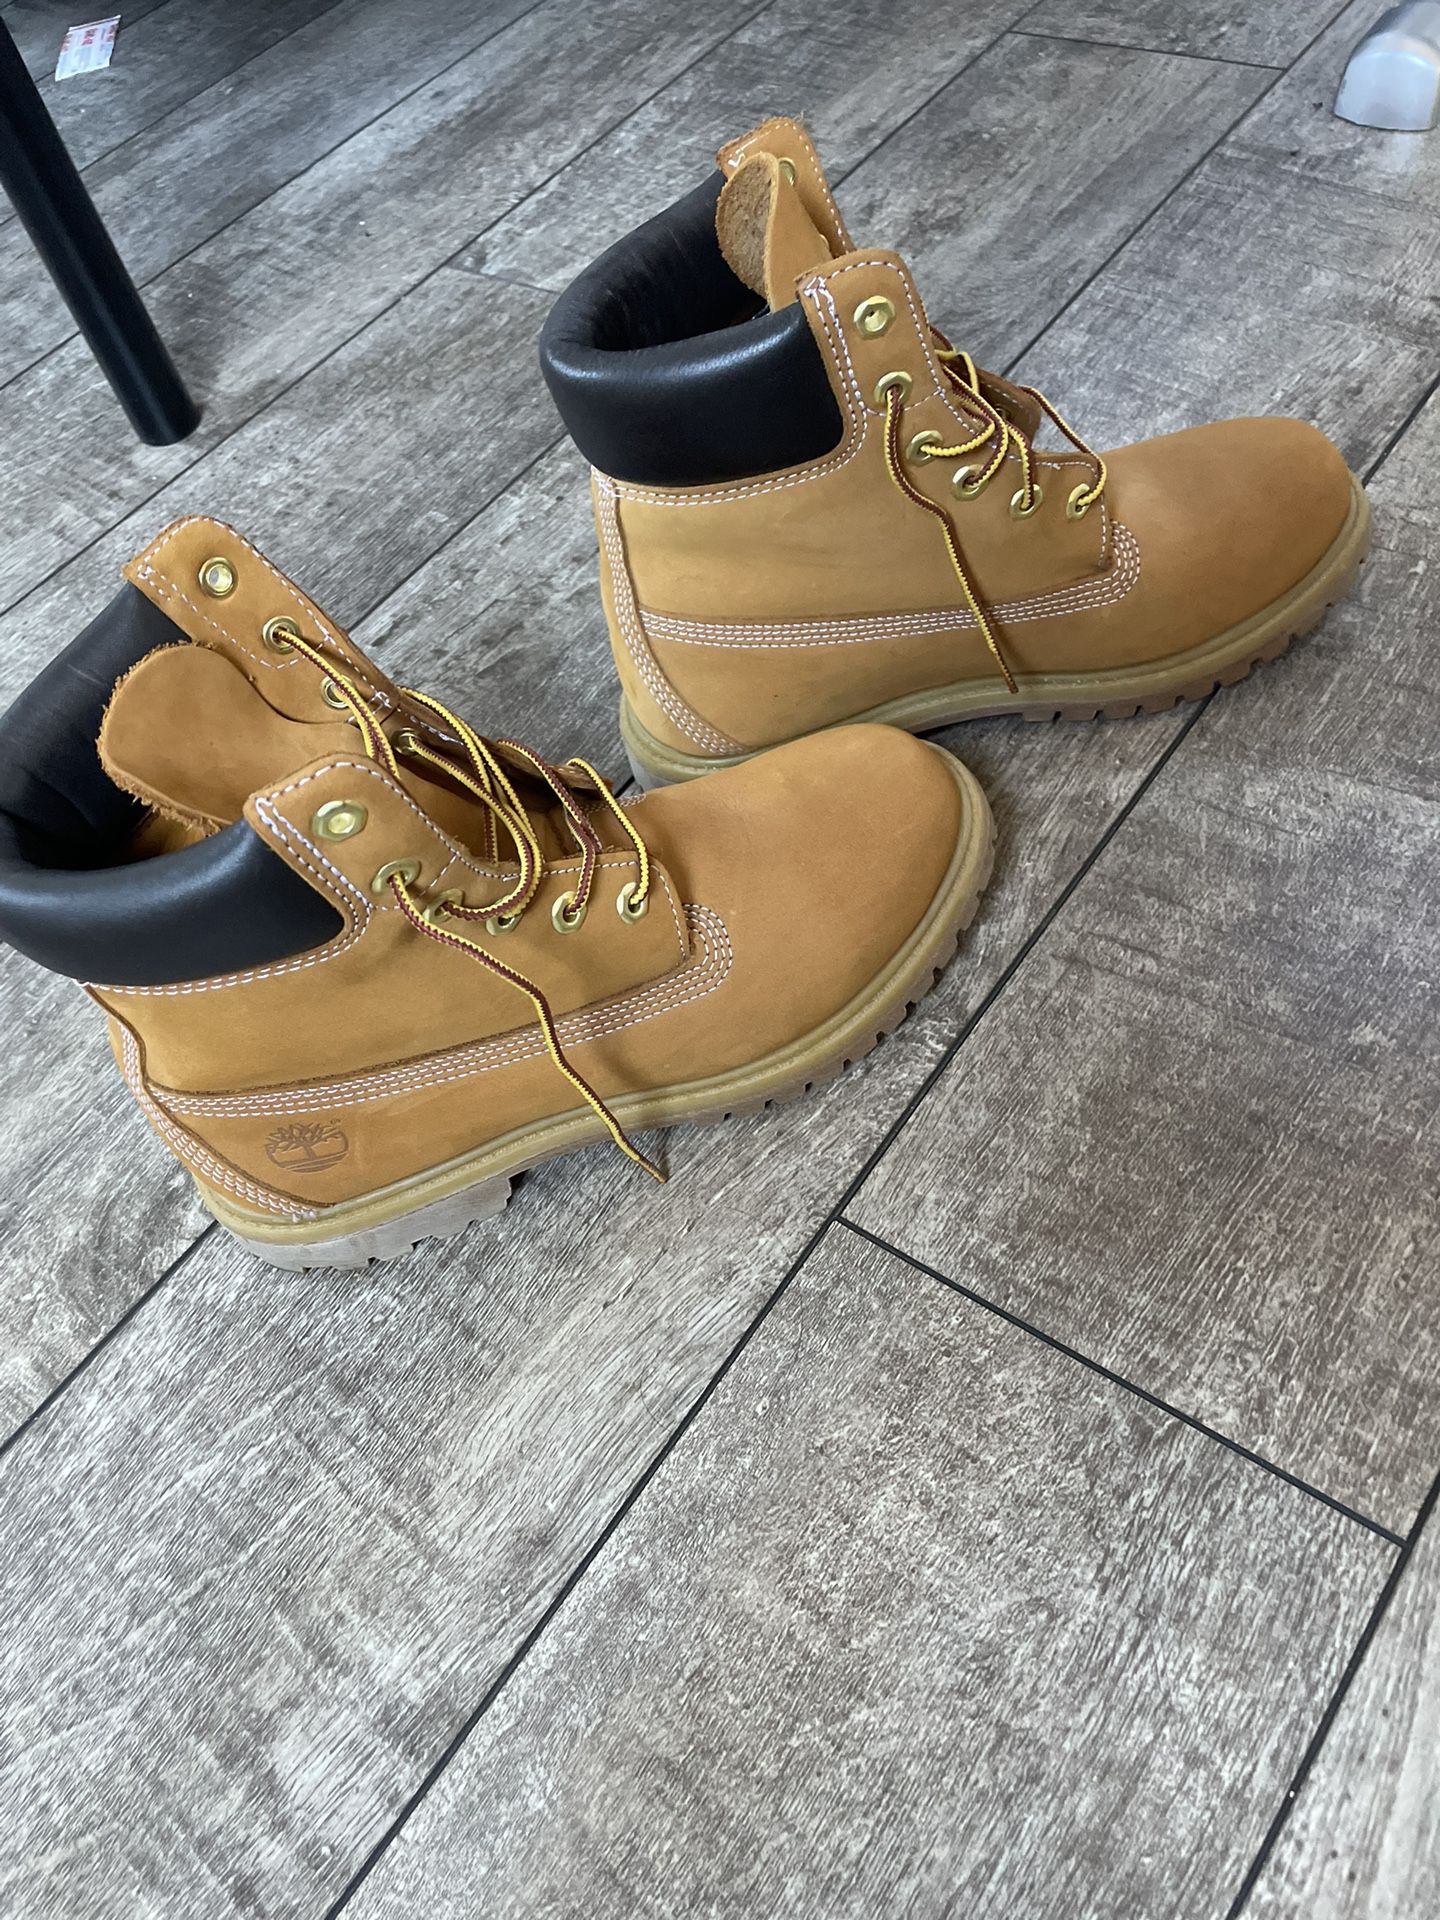 Timberland Boots Size 8